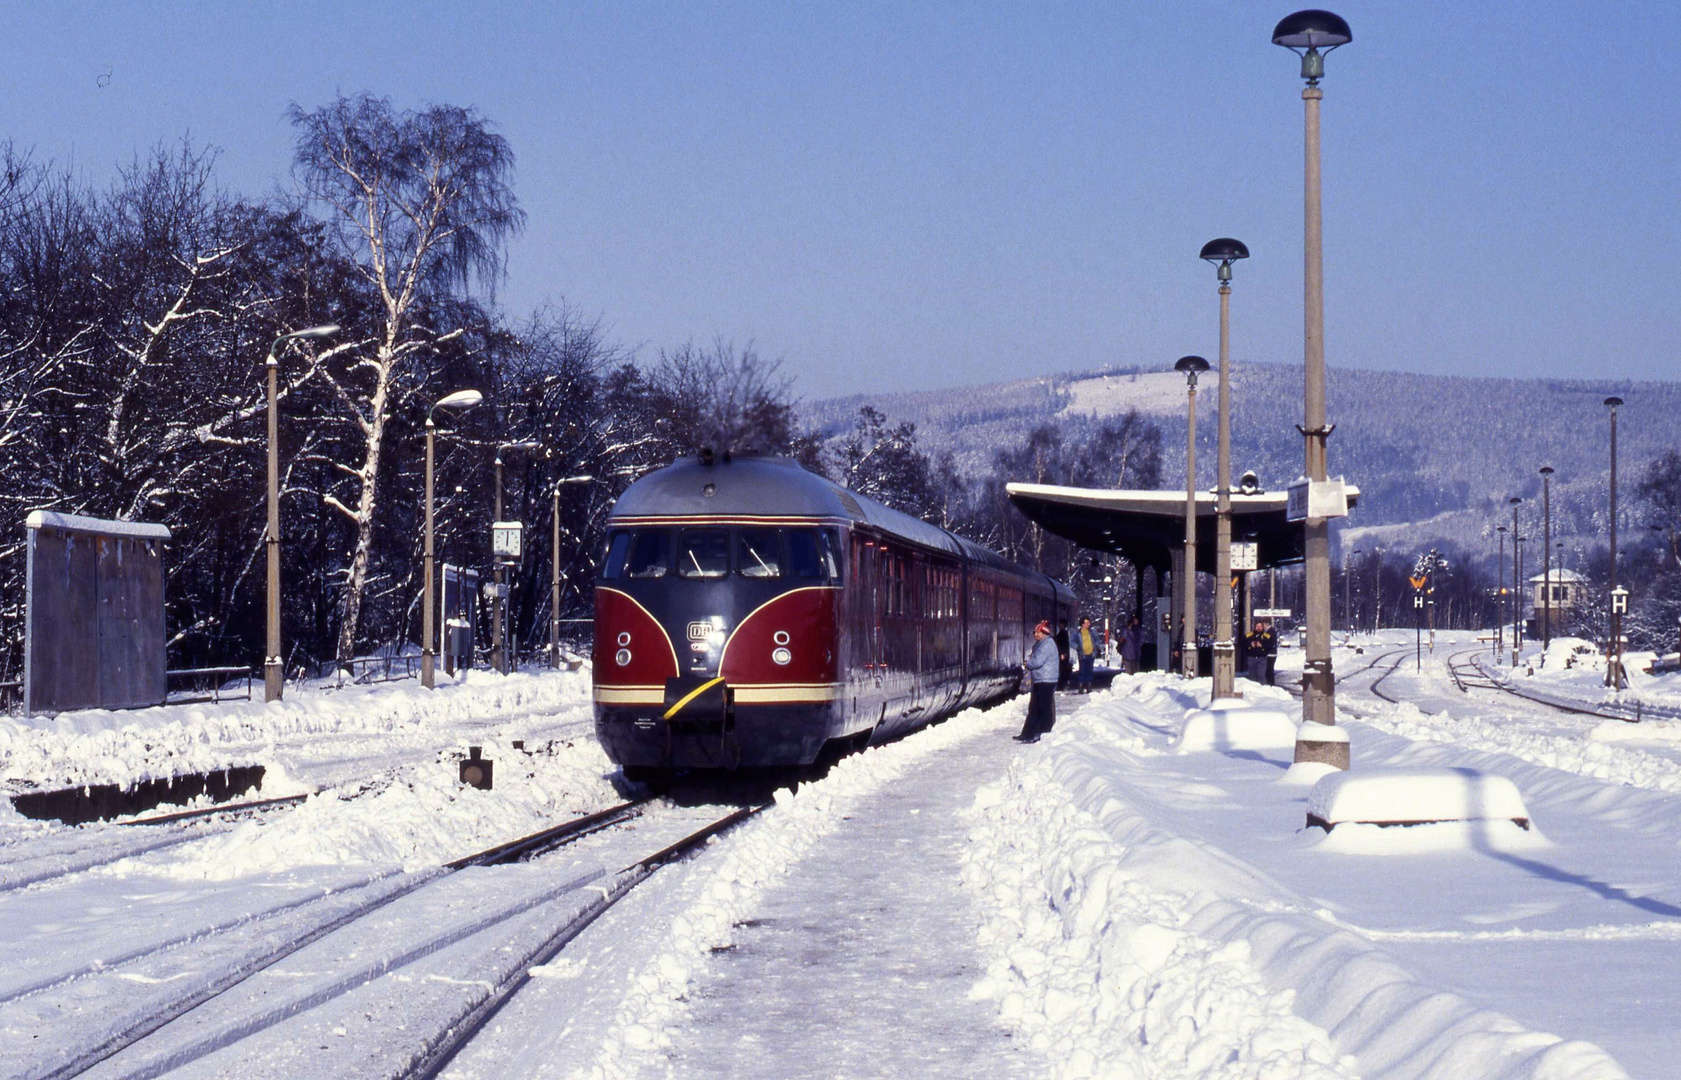 30 Jan 93 in Thüringen 3